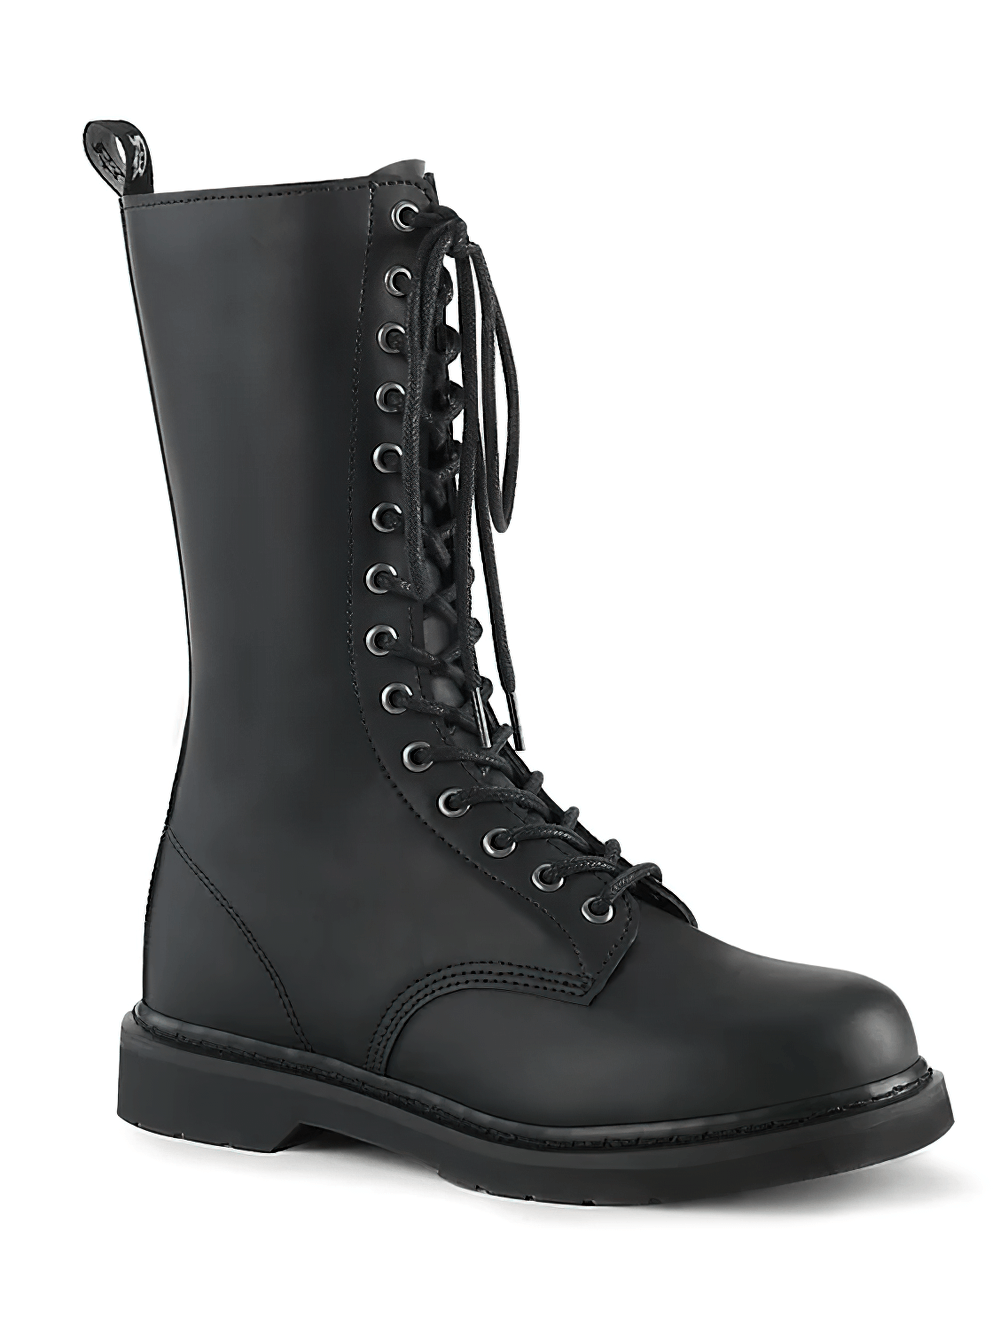 DEMONIA Unisex Leather 14-Eyelet Mid-Calf Boots